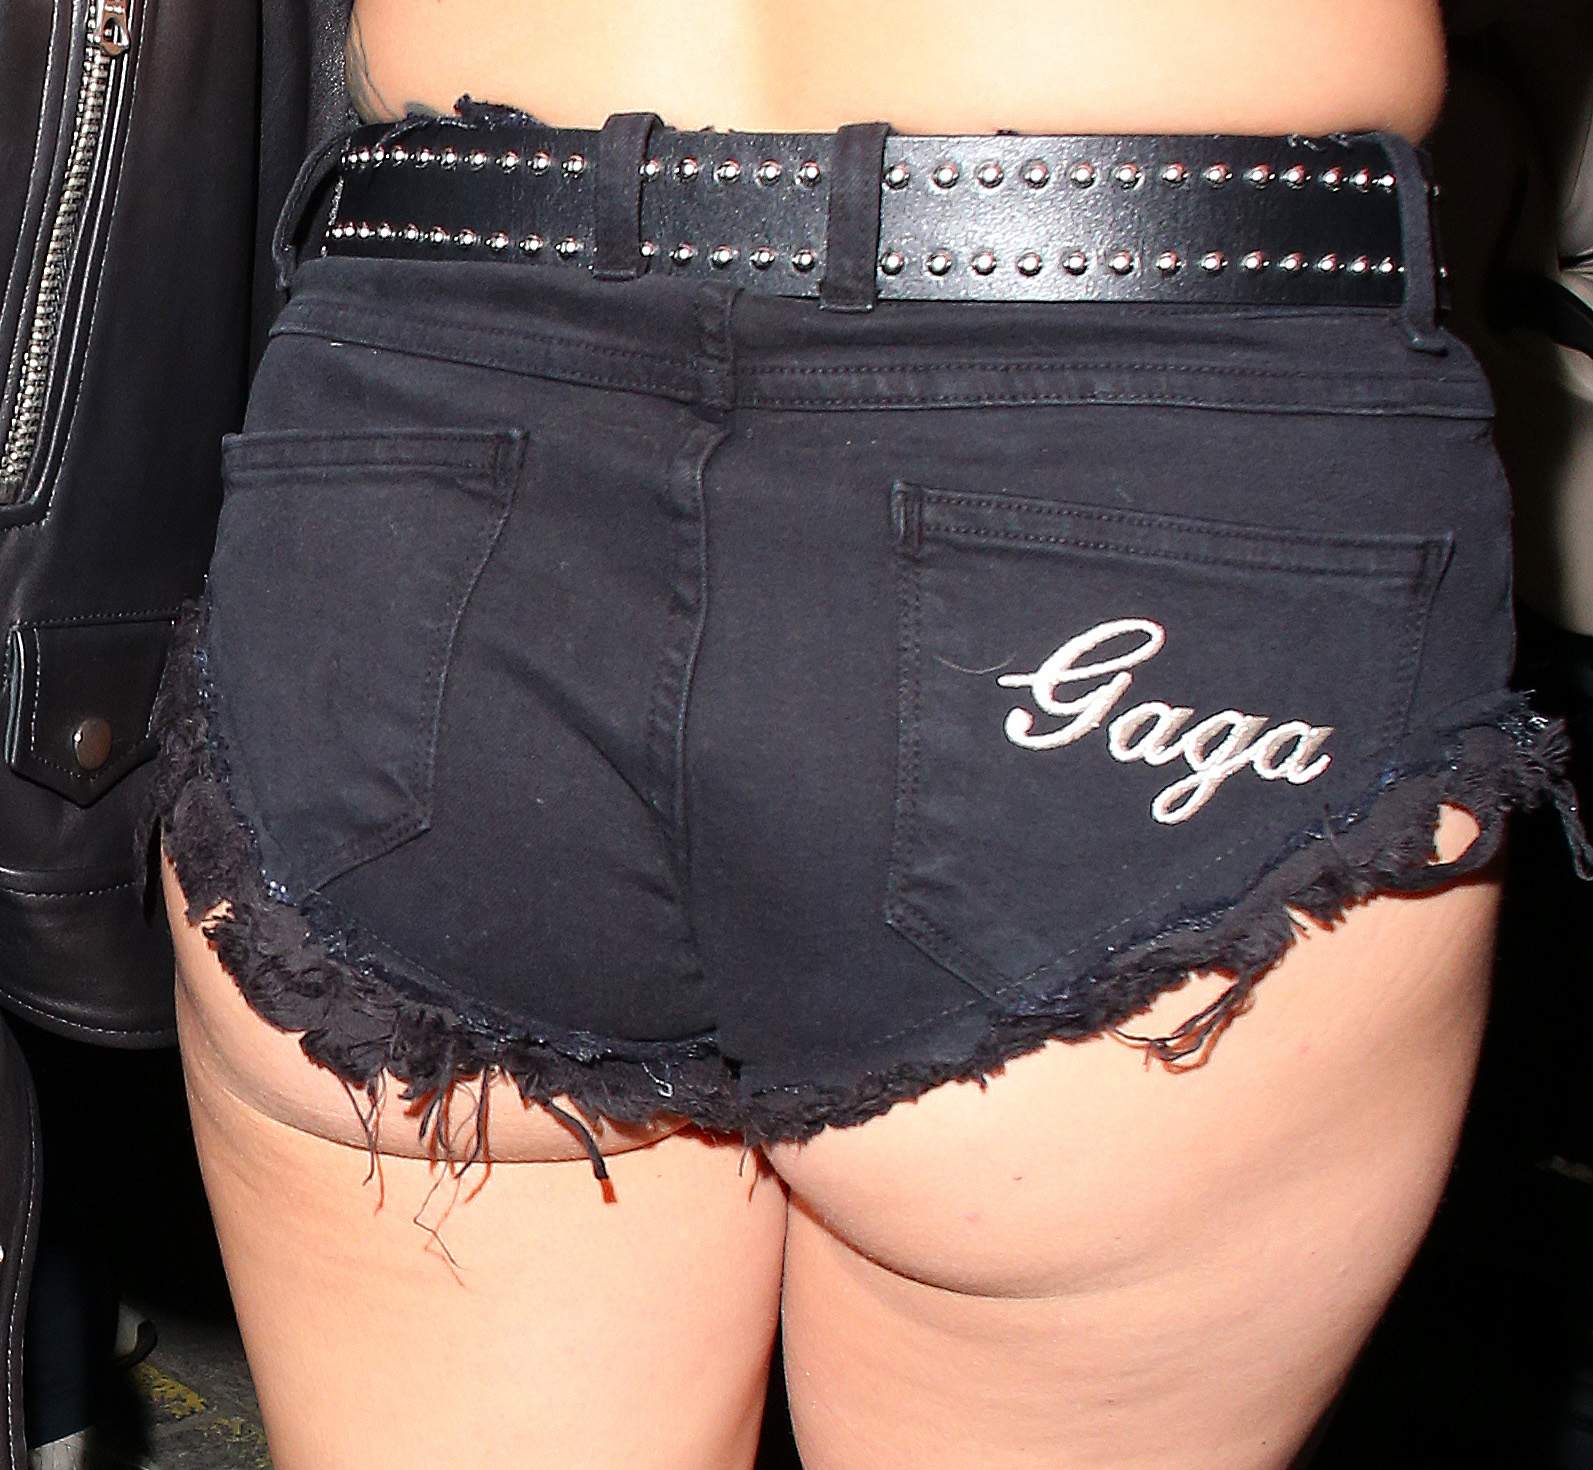 Lady Gaga Underboob Photos #79558005